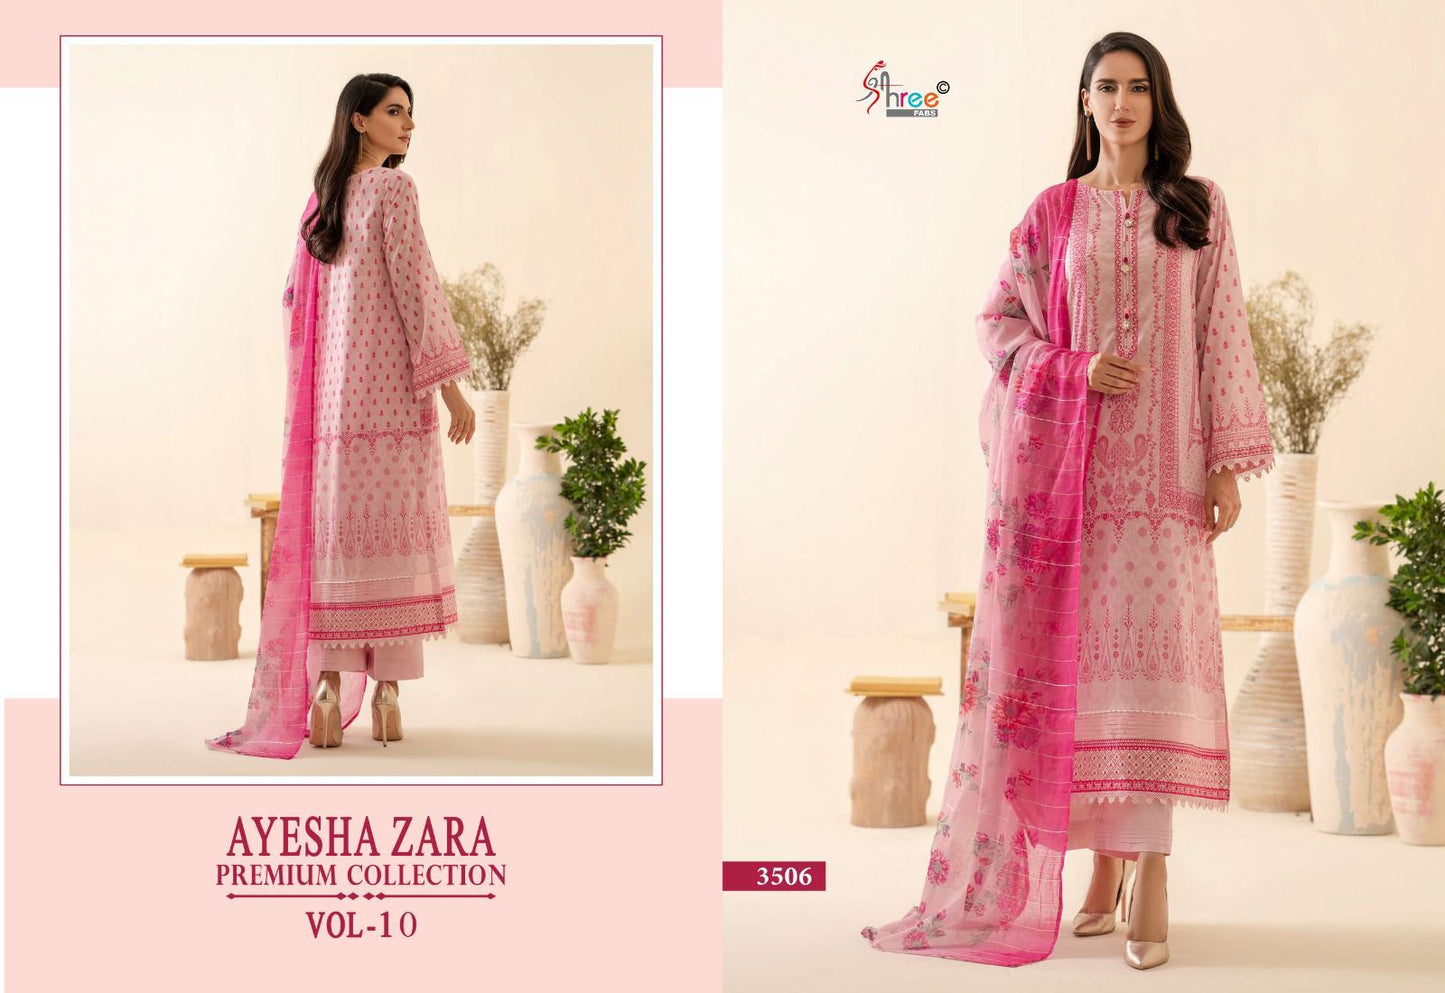 Ayesha Zara Premium Collection Vol 10 Shree Fabs Cotton Pakistani Patch Work Suits